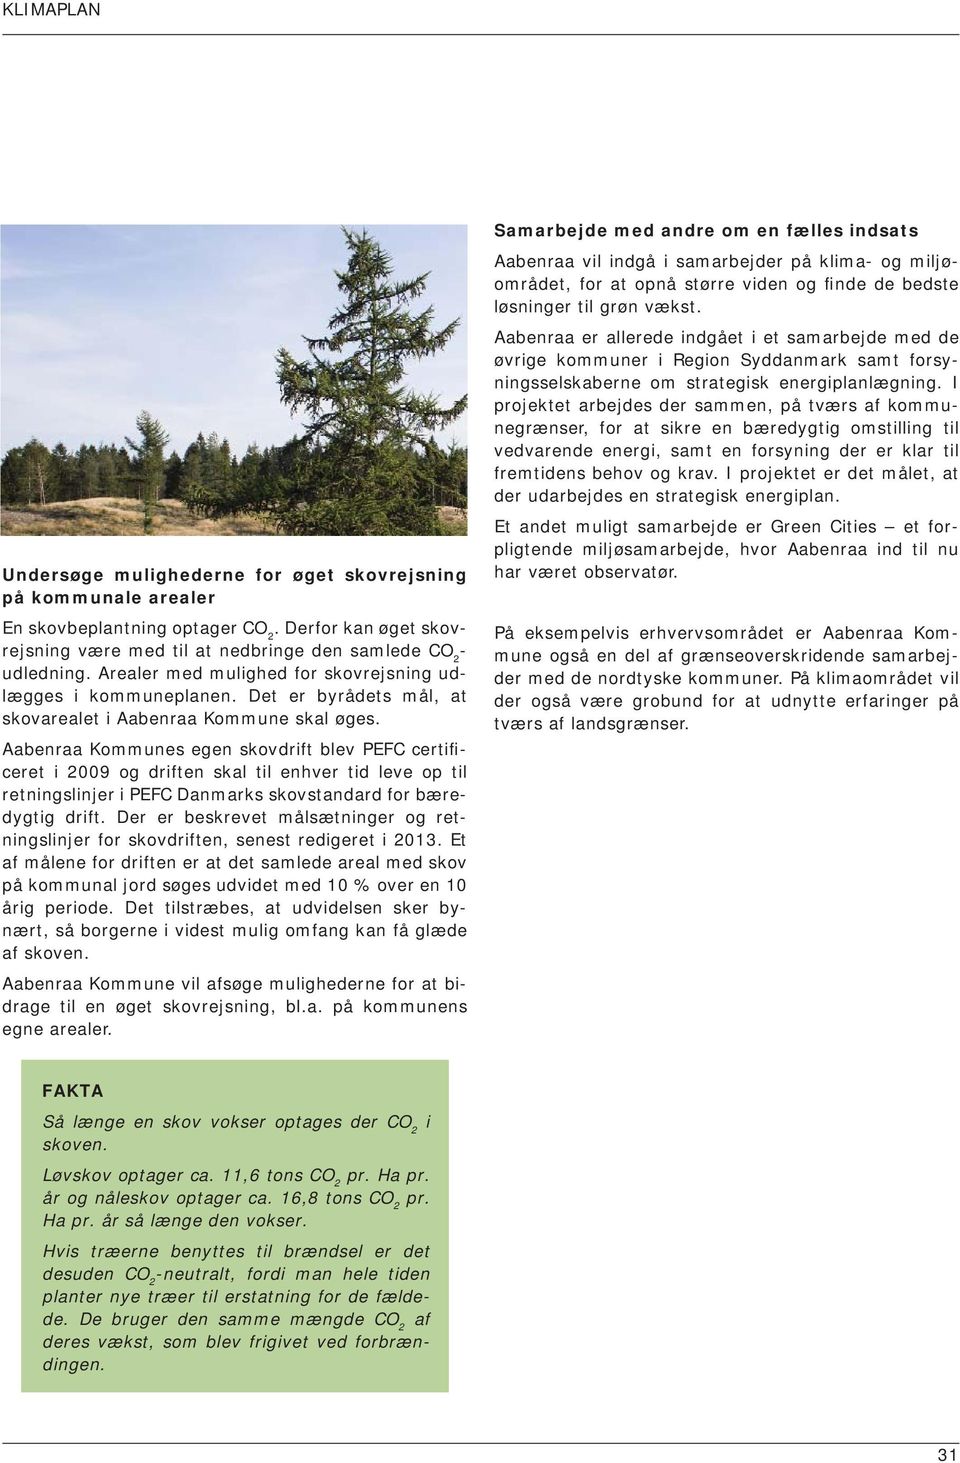 Aabenraa Kommunes egen skovdrift blev PEFC certificeret i 2009 og driften skal til enhver tid leve op til retningslinjer i PEFC Danmarks skovstandard for bæredygtig drift.